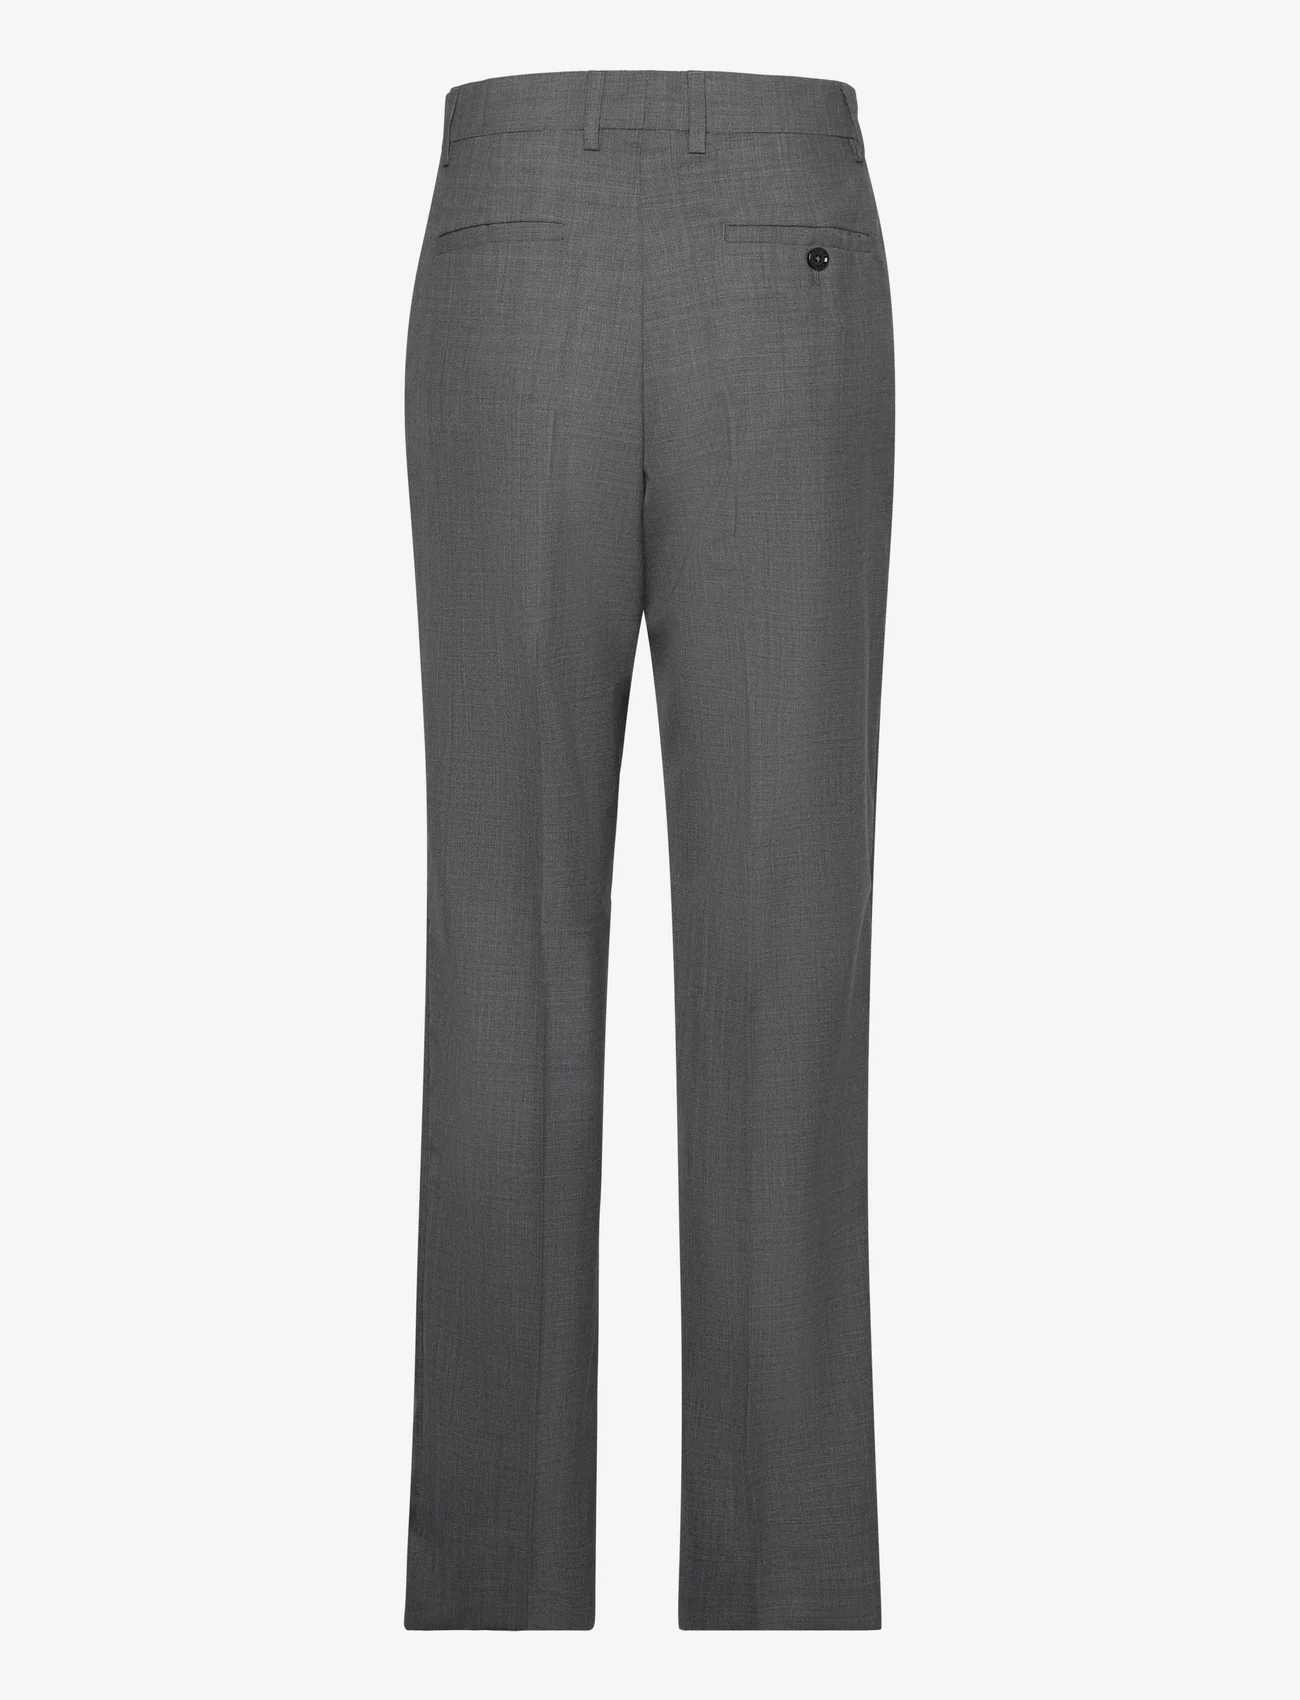 Hope - Straight-leg Suit Trousers - formell - grey melange - 1